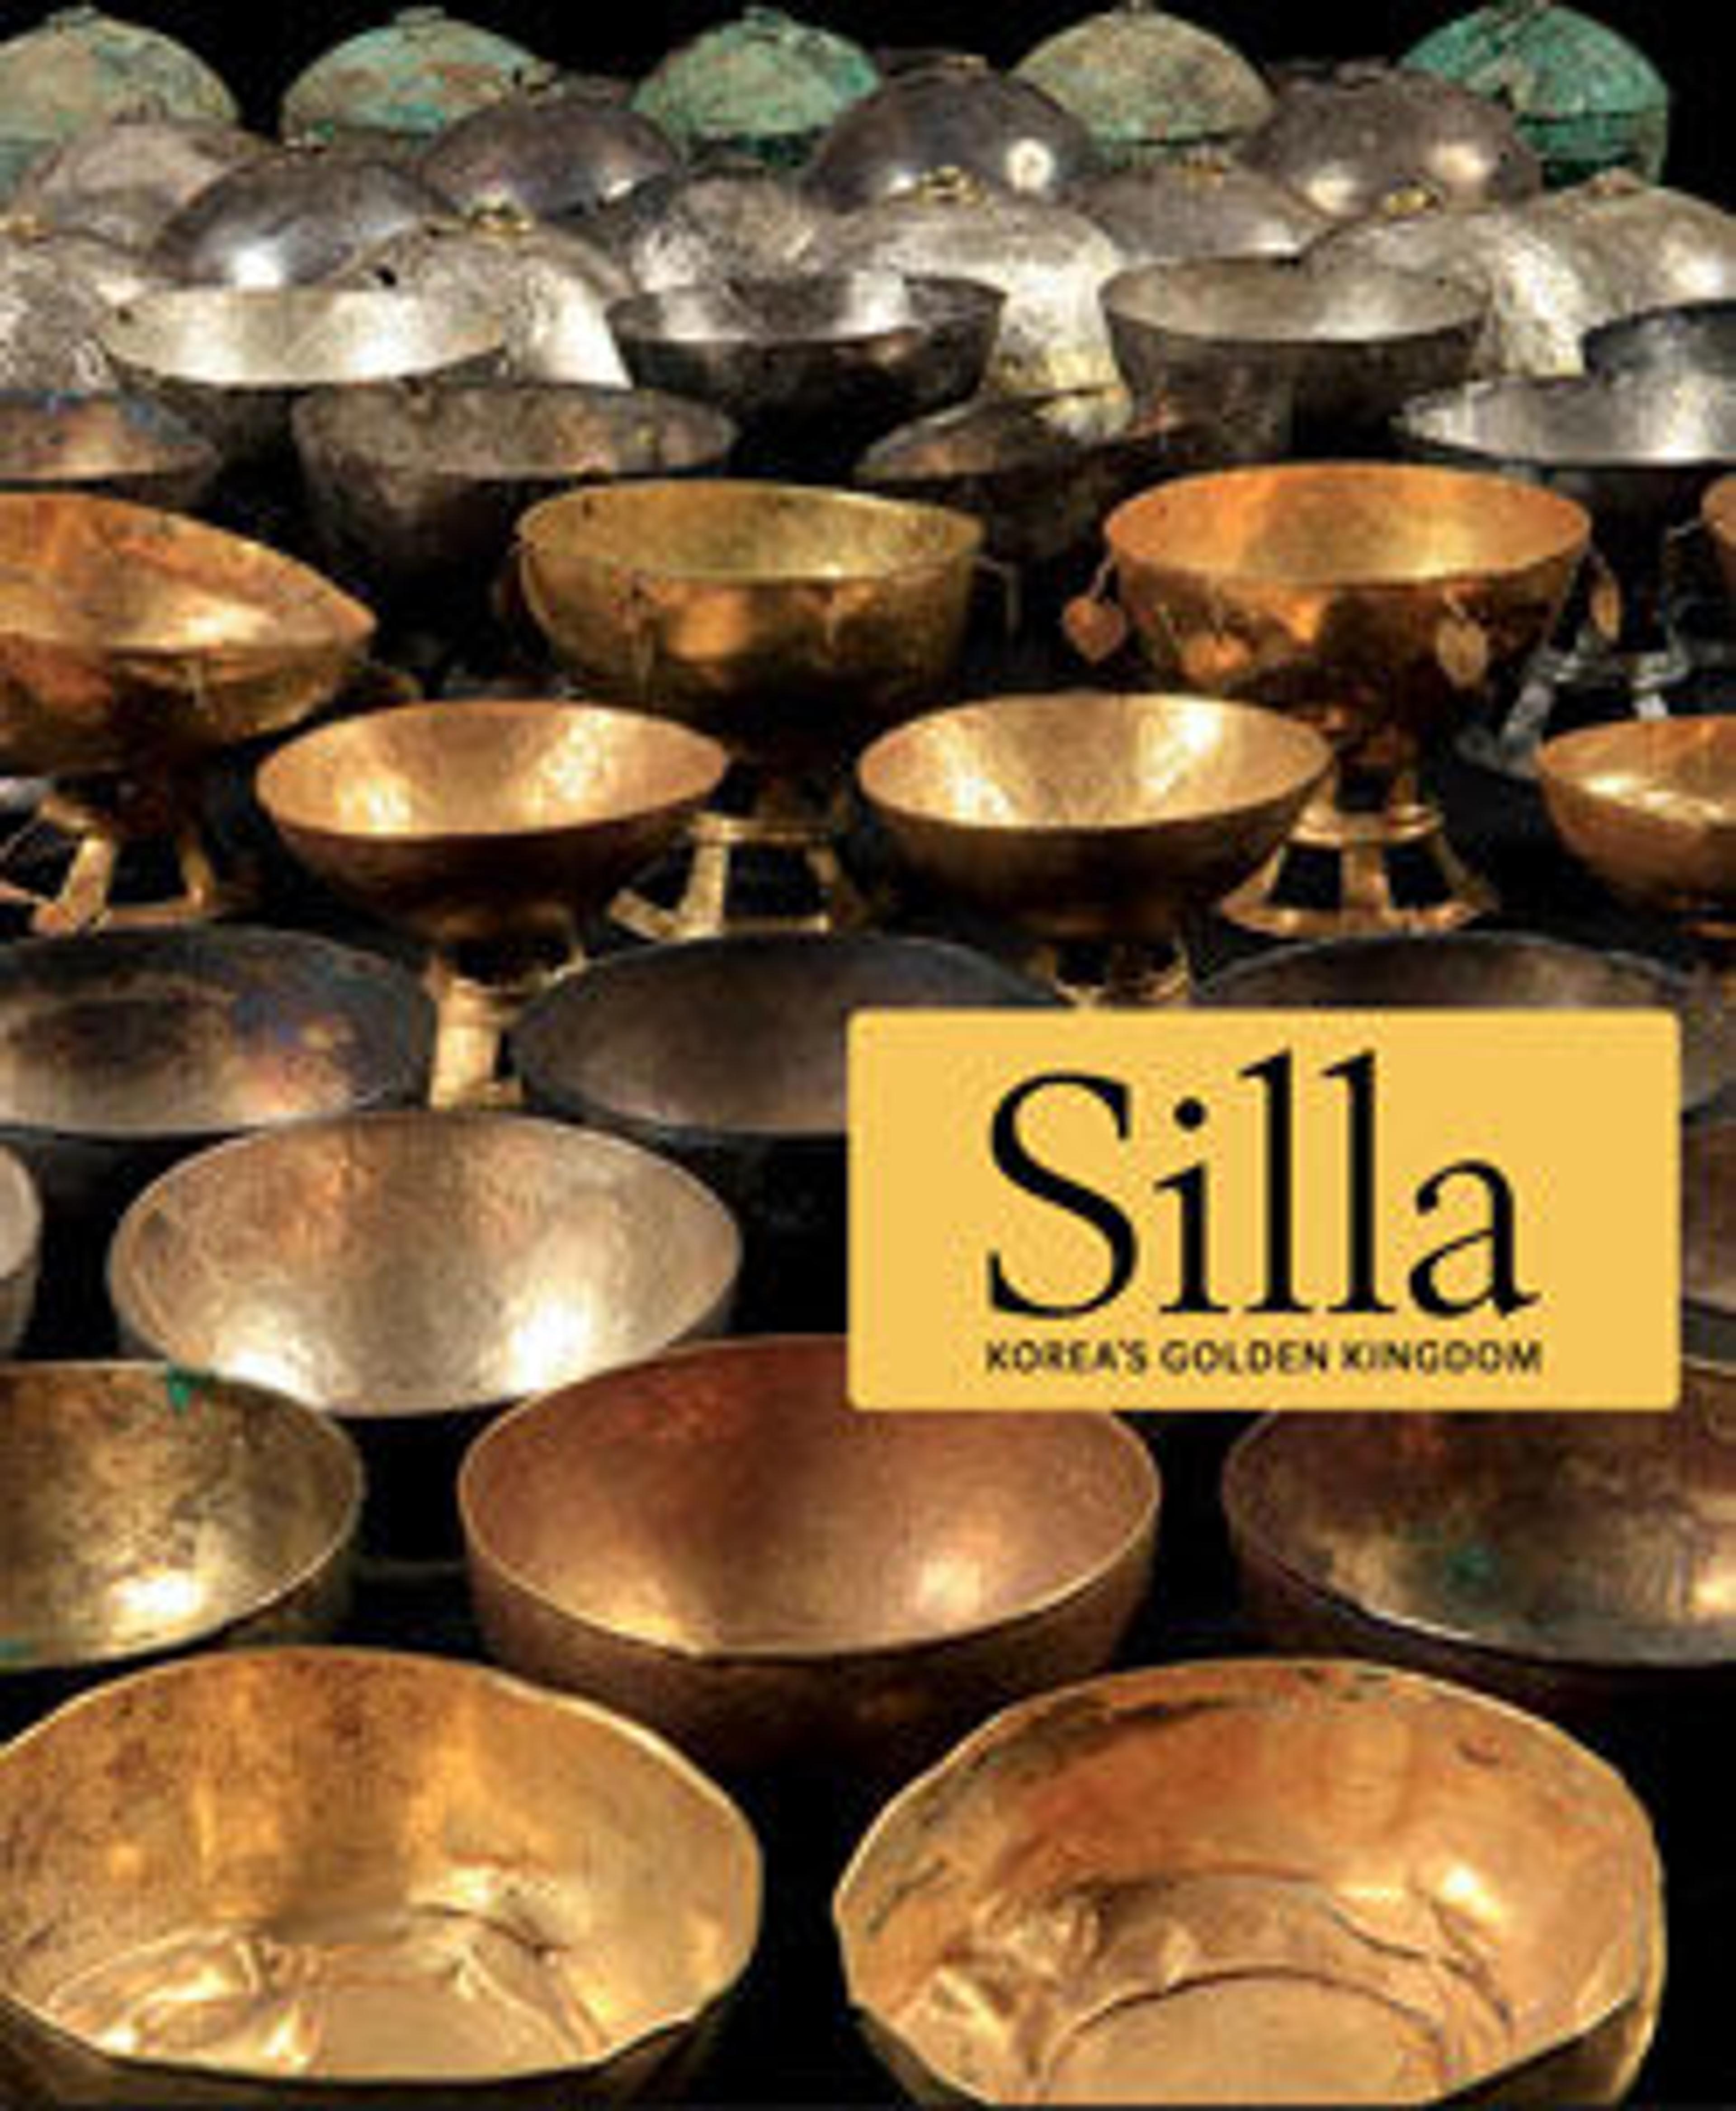 Silla, Korea's Golden Kingdom